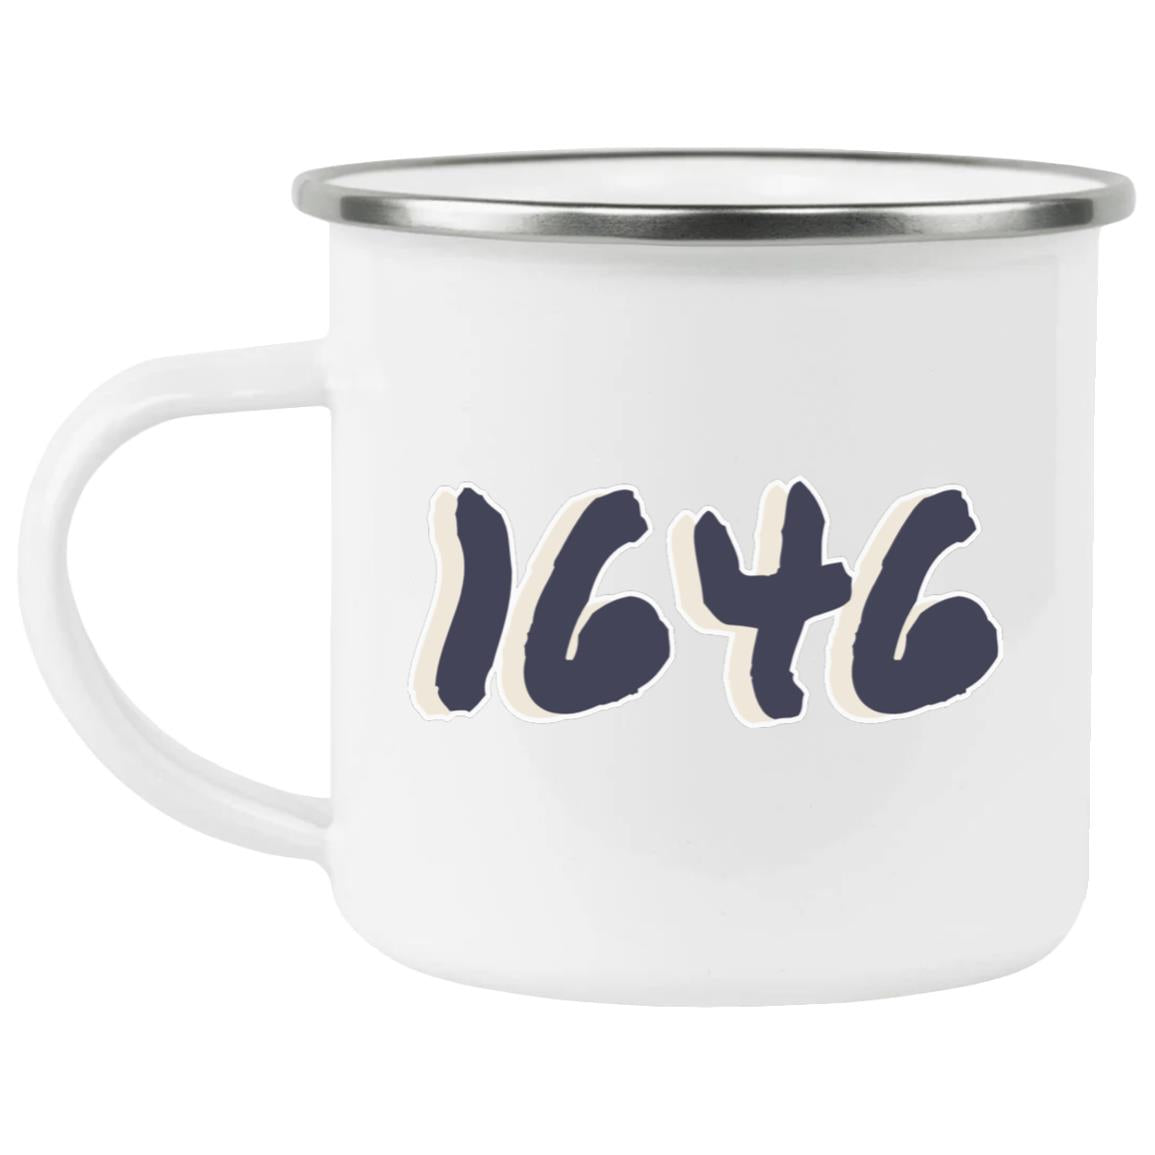 1646 (12oz Enamel Camping Mug)